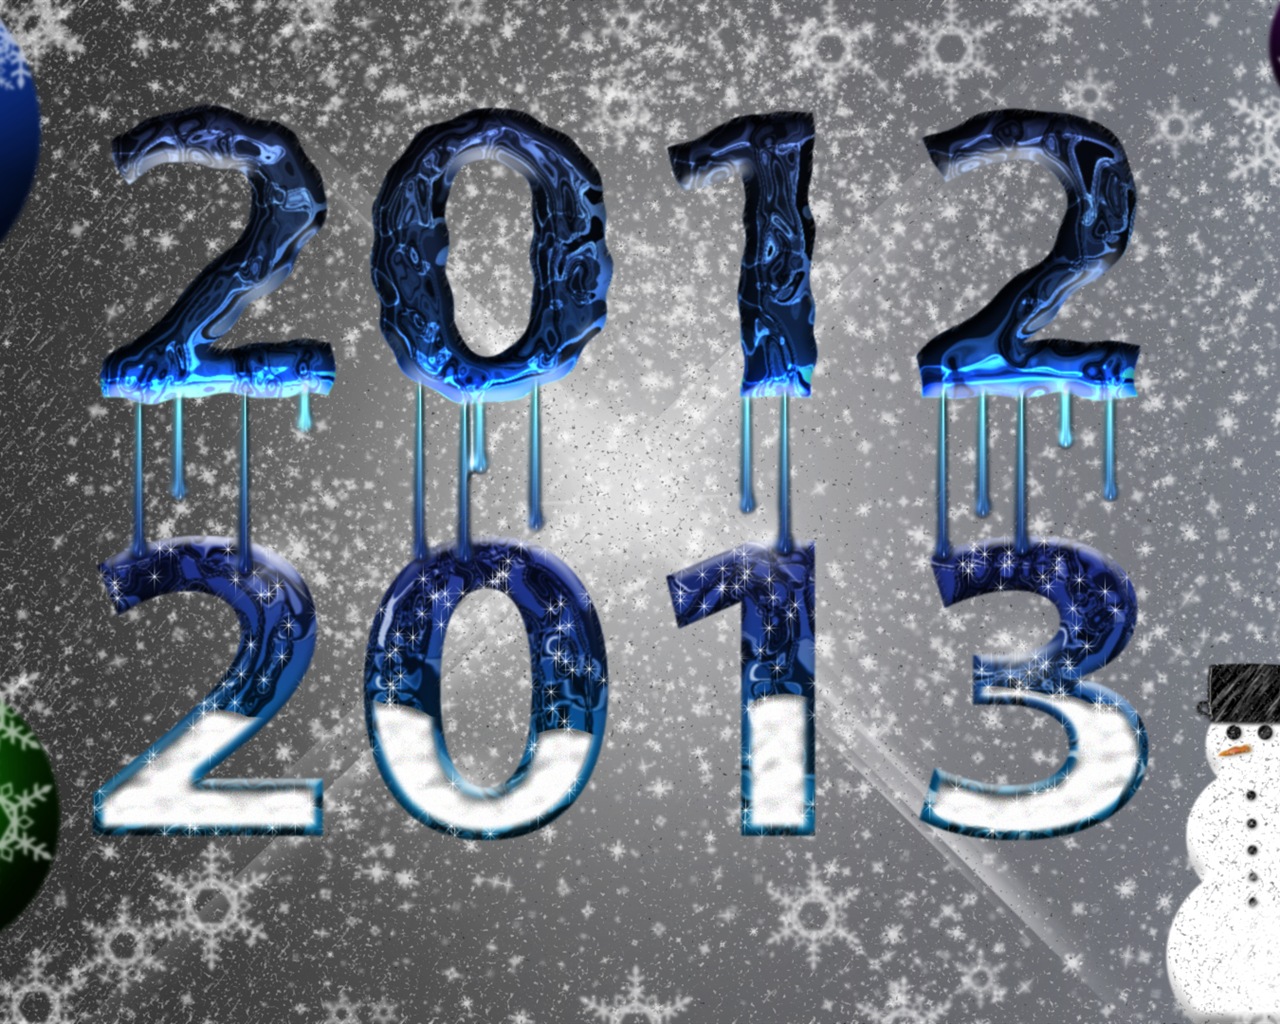 2013 New Year theme creative wallpaper(2) #3 - 1280x1024